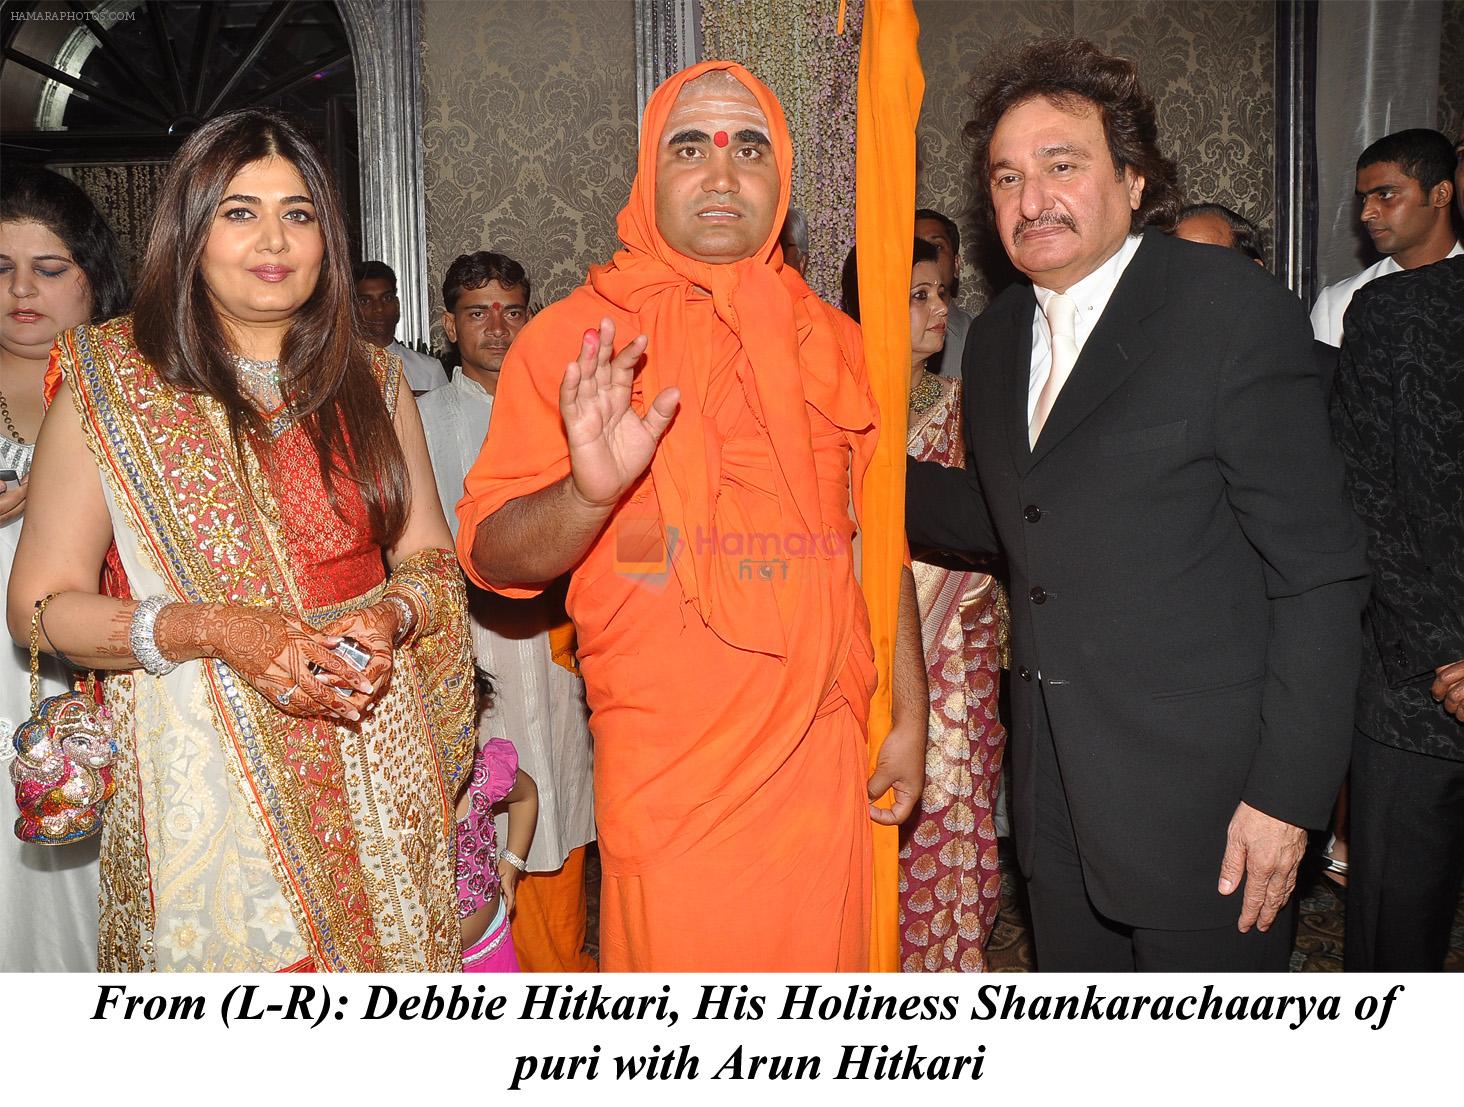 Debbie Hitkari, His Holiness Shankaracharya of Puri with Arun Hitkari at the Engagement ceremony of Arjun Hitkari with Gayatri on 19th April 2012